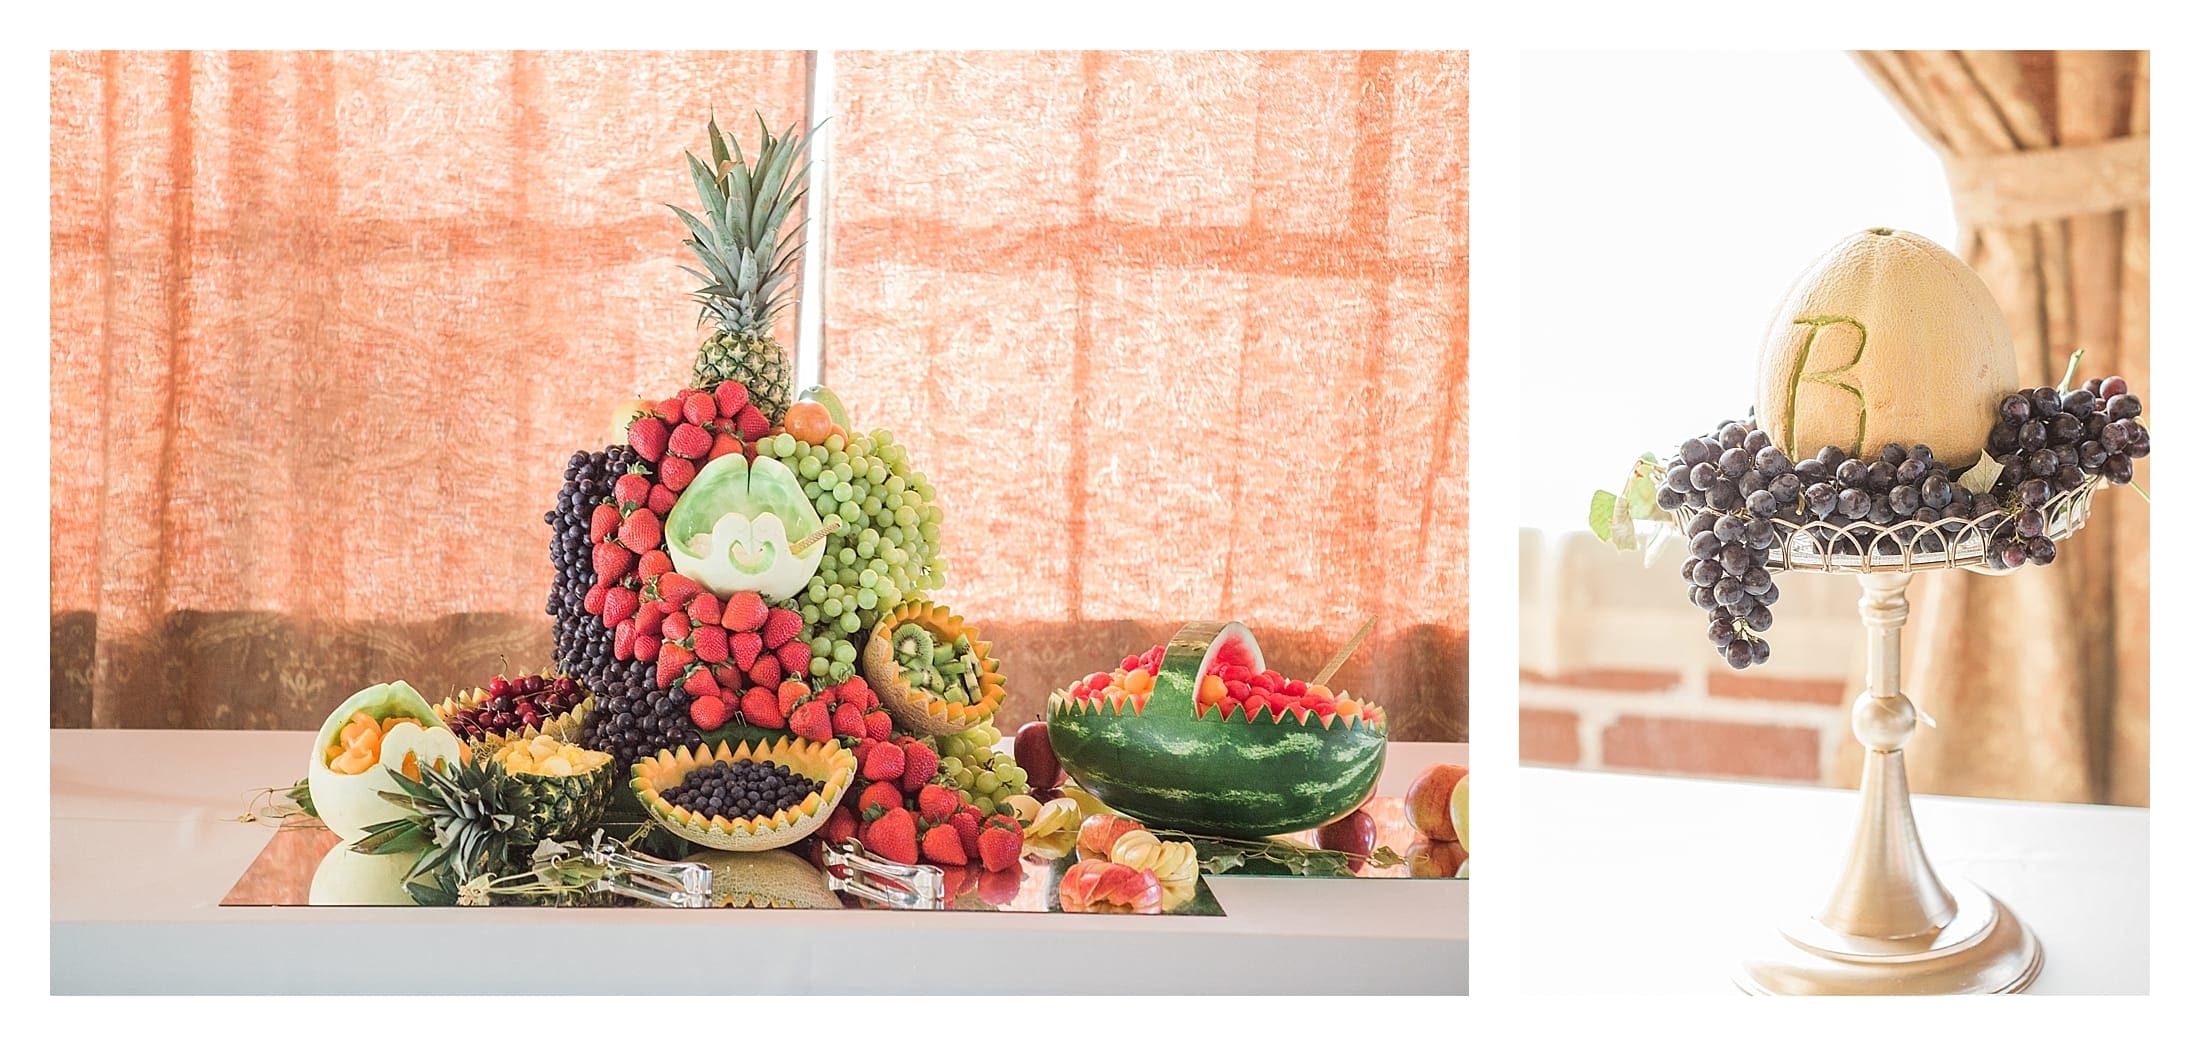 Fruit Display at wedding reception